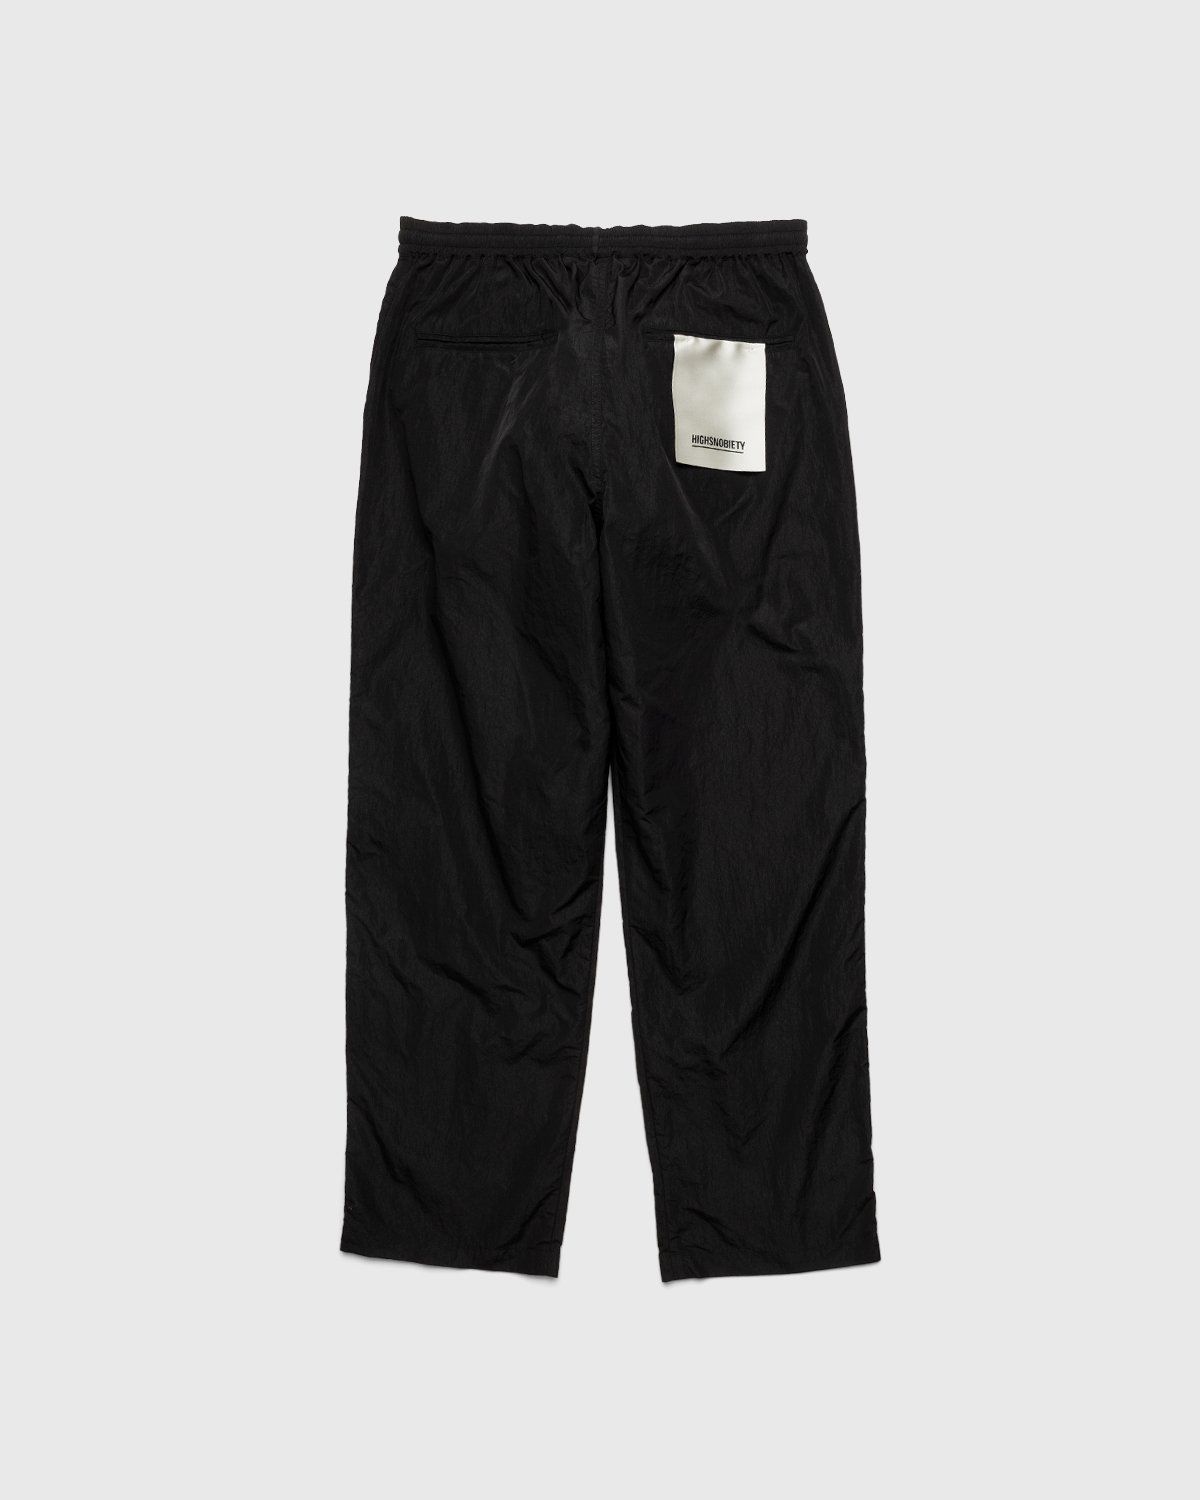 Highsnobiety – Crepe Nylon Elastic Pants Black - Pants - Black - Image 2